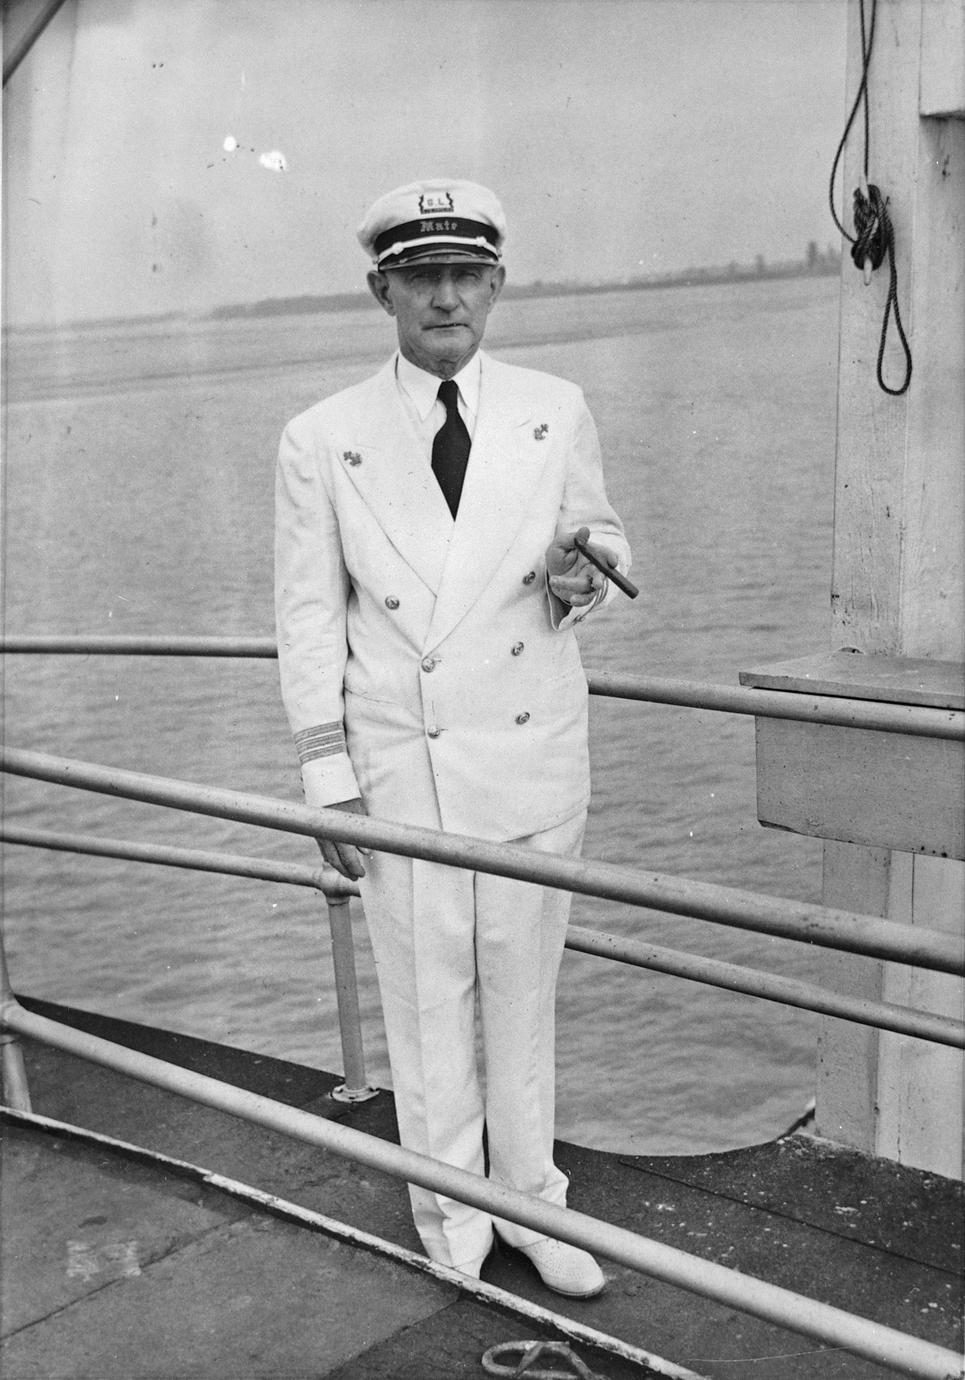 Gordon C. Greene (Packet/Excursion, 1935-1952)